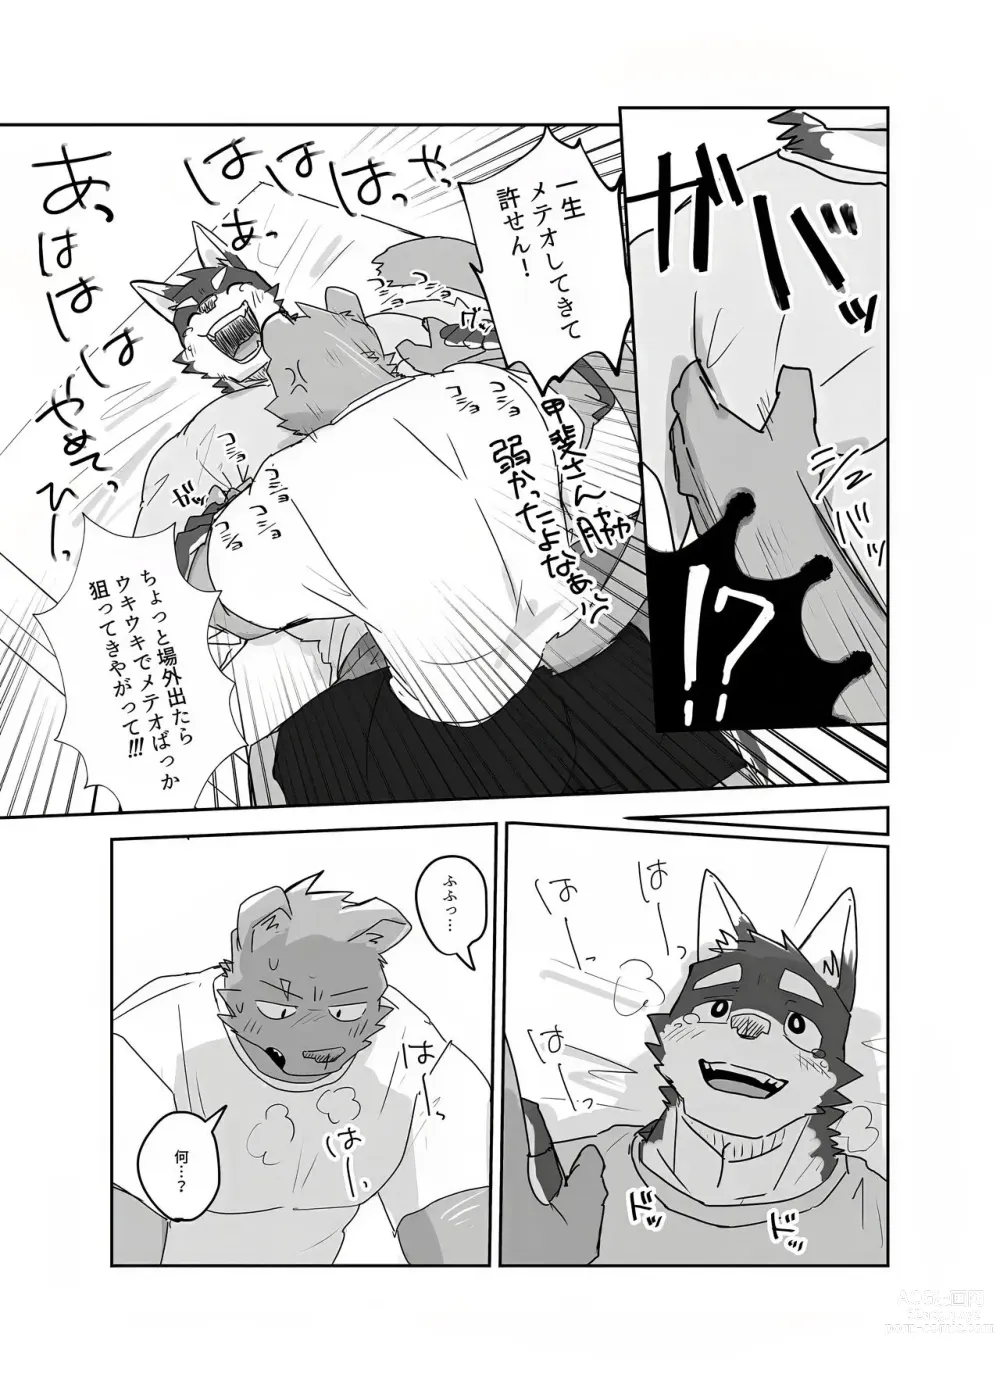 Page 4 of doujinshi 梅雨の日